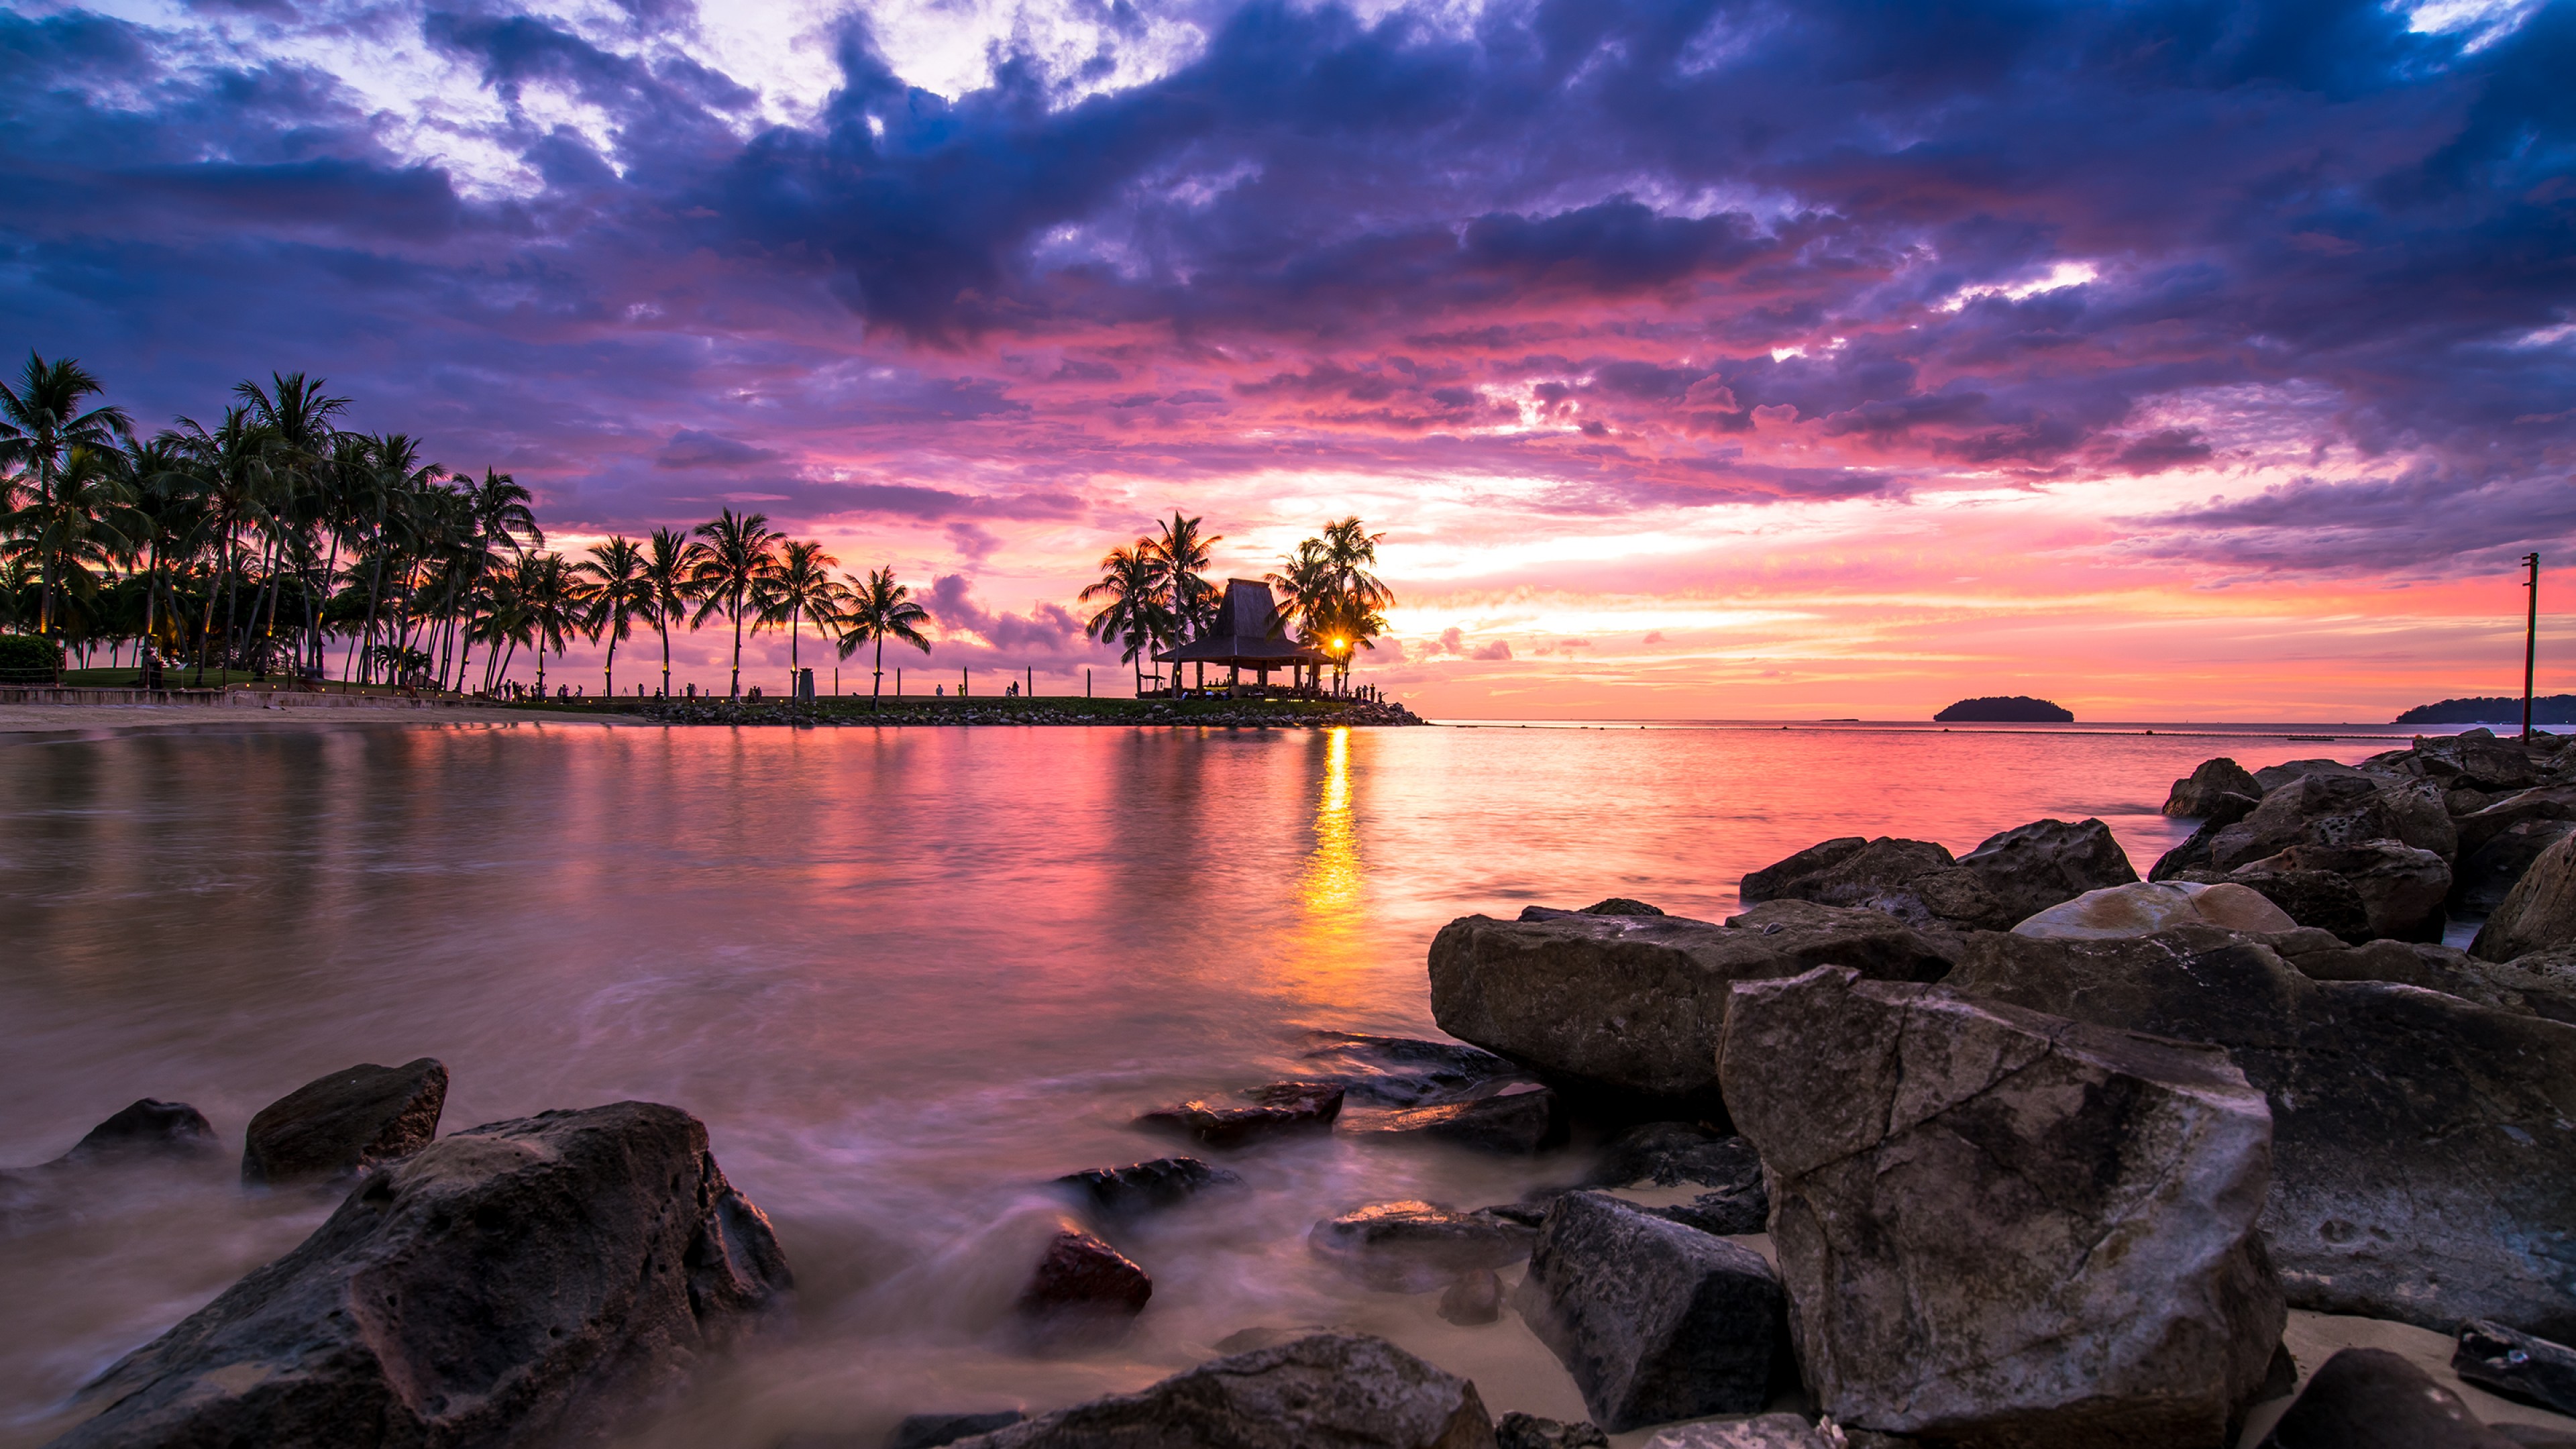 Beach Sunset Wallpaper for Desktop and Mobiles 4K Ultra HD